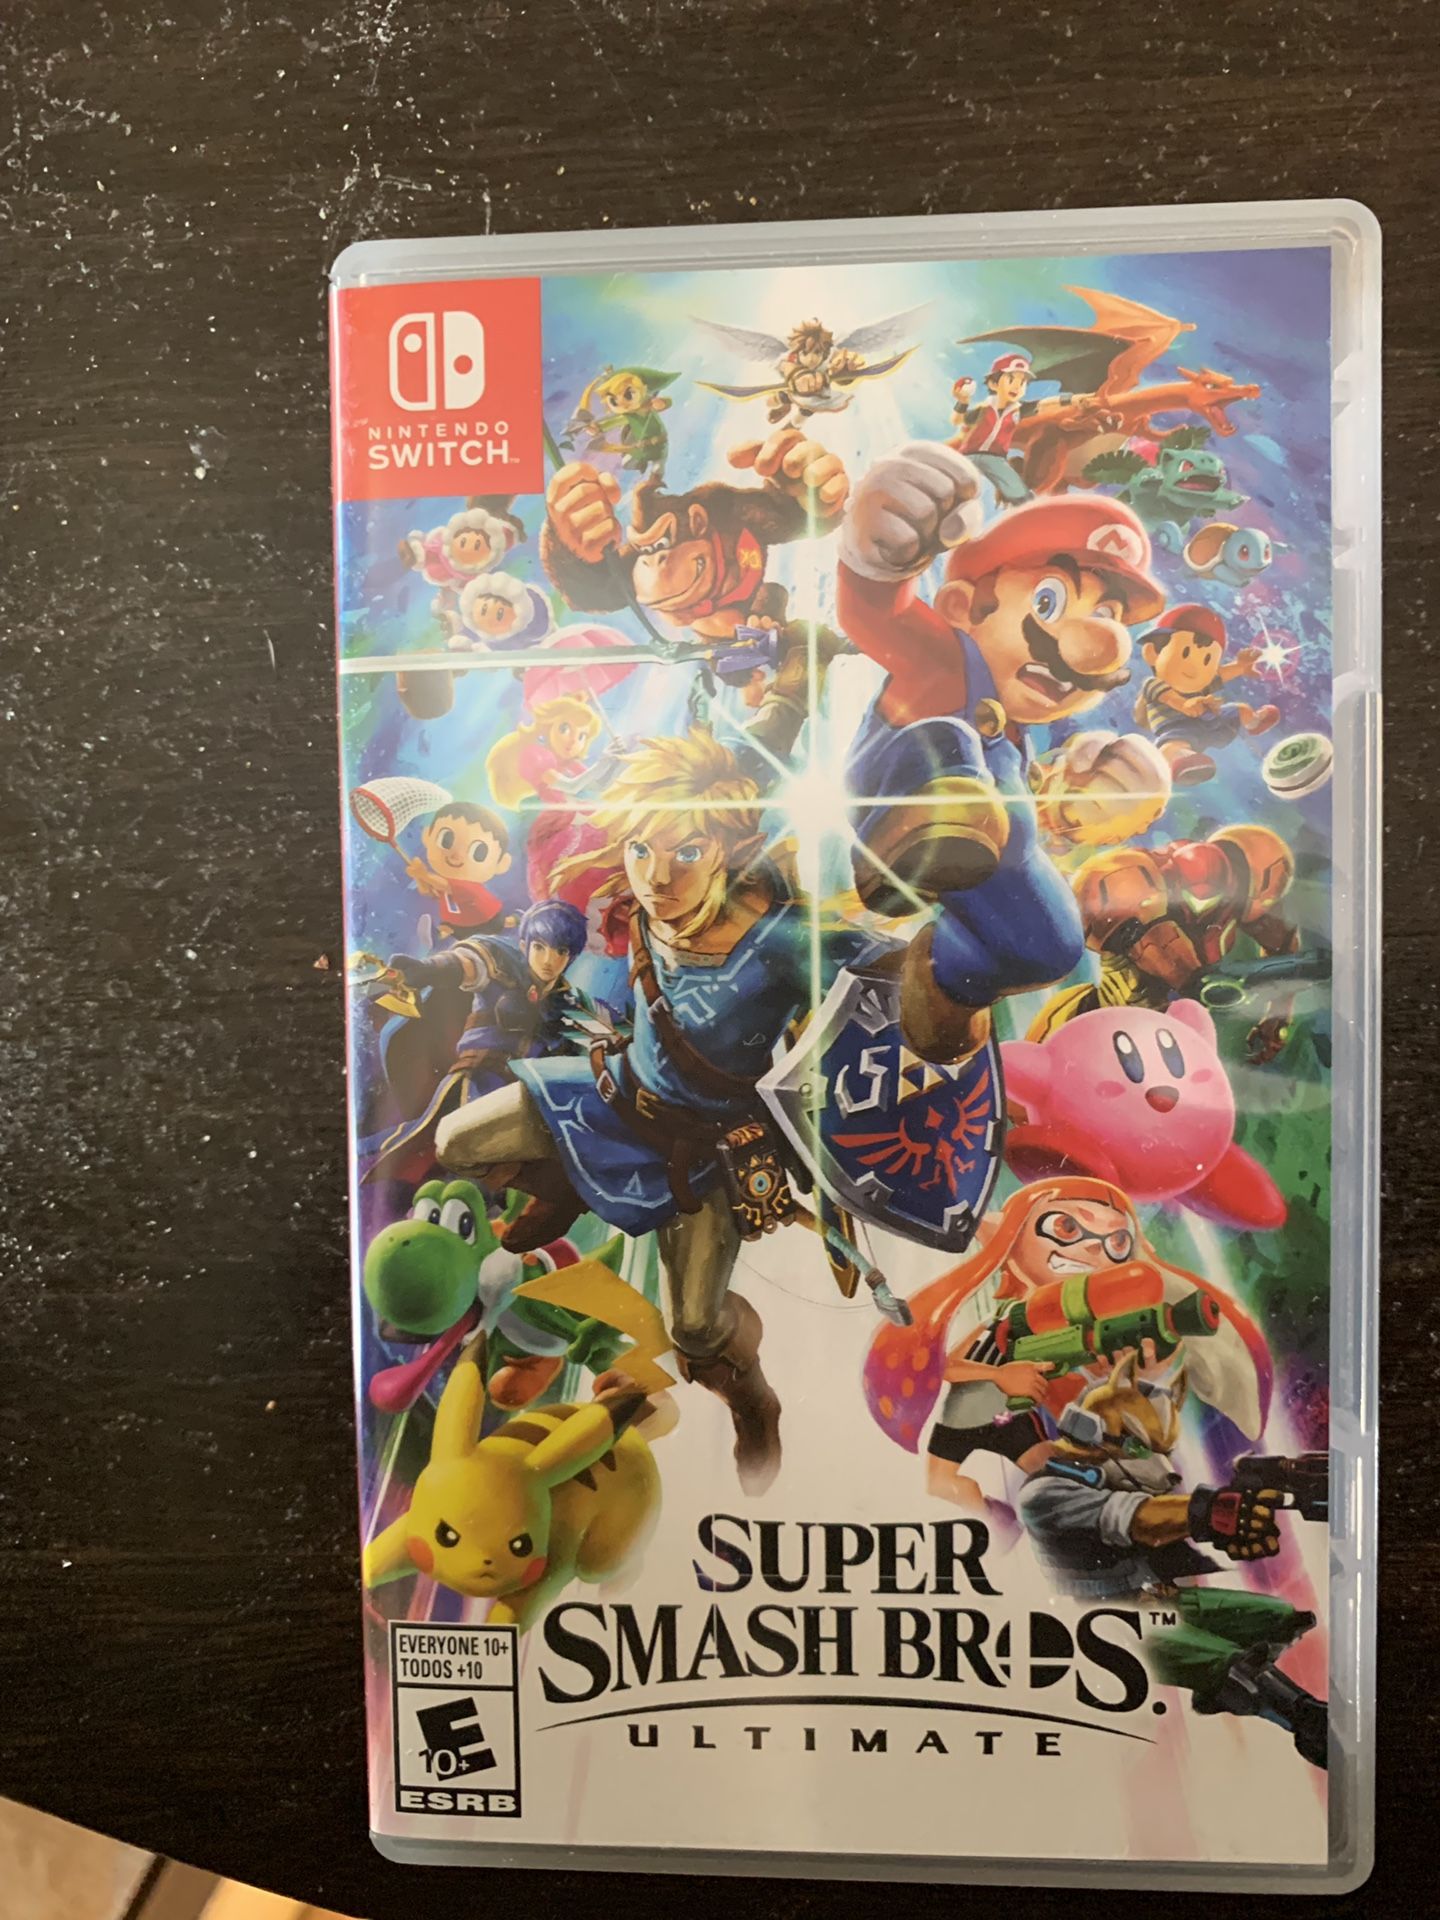 Super smash bros. Ultimate for Nintendo Switch